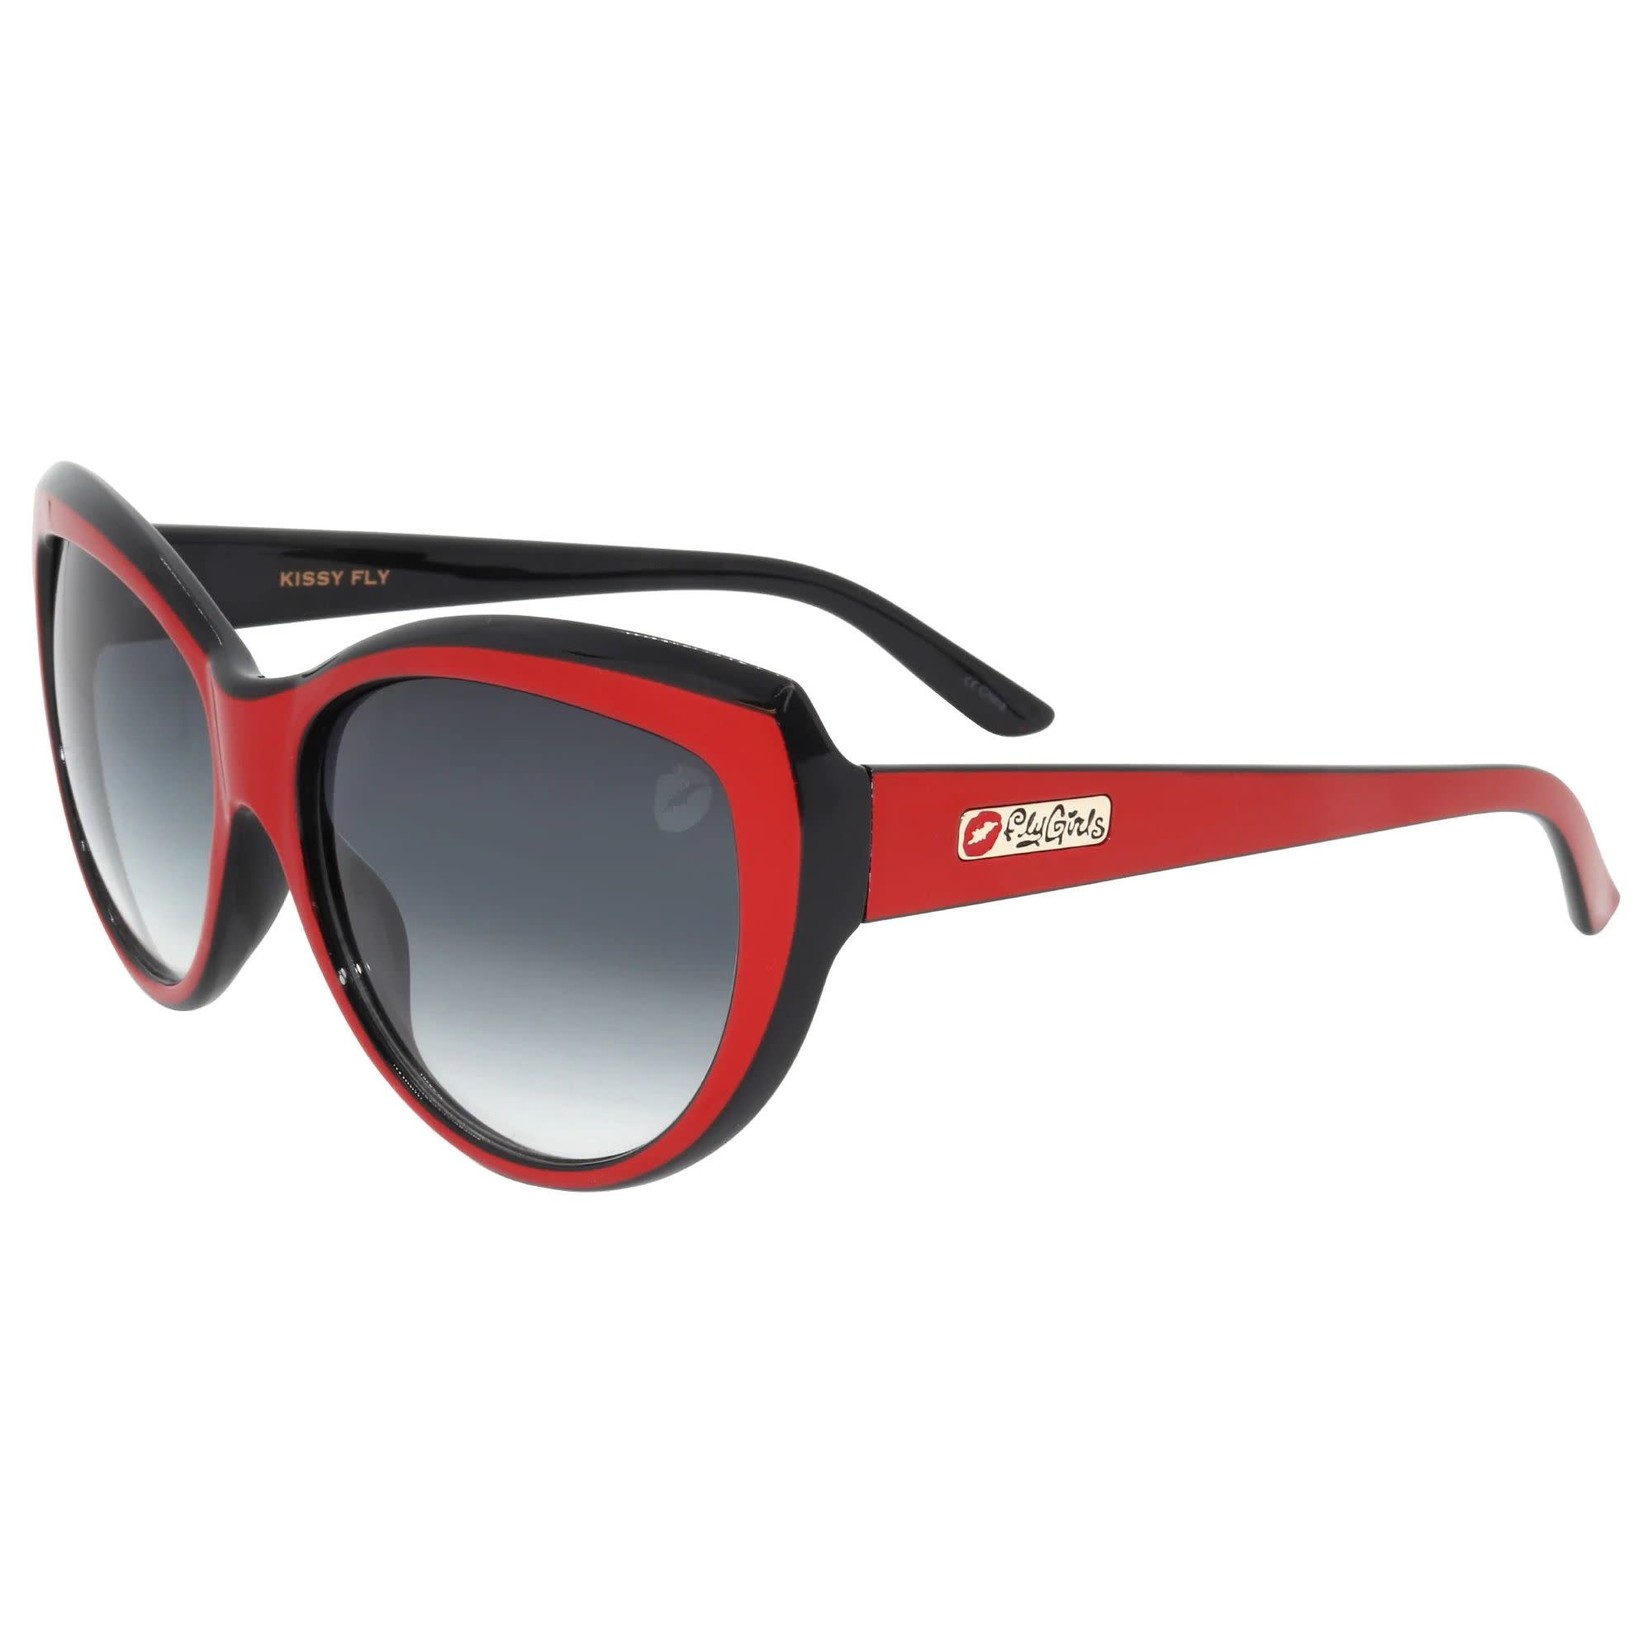 Black Flys Black Flys Kissy Fly Sunglasses - Red Black w/ Smoke Grad Lens